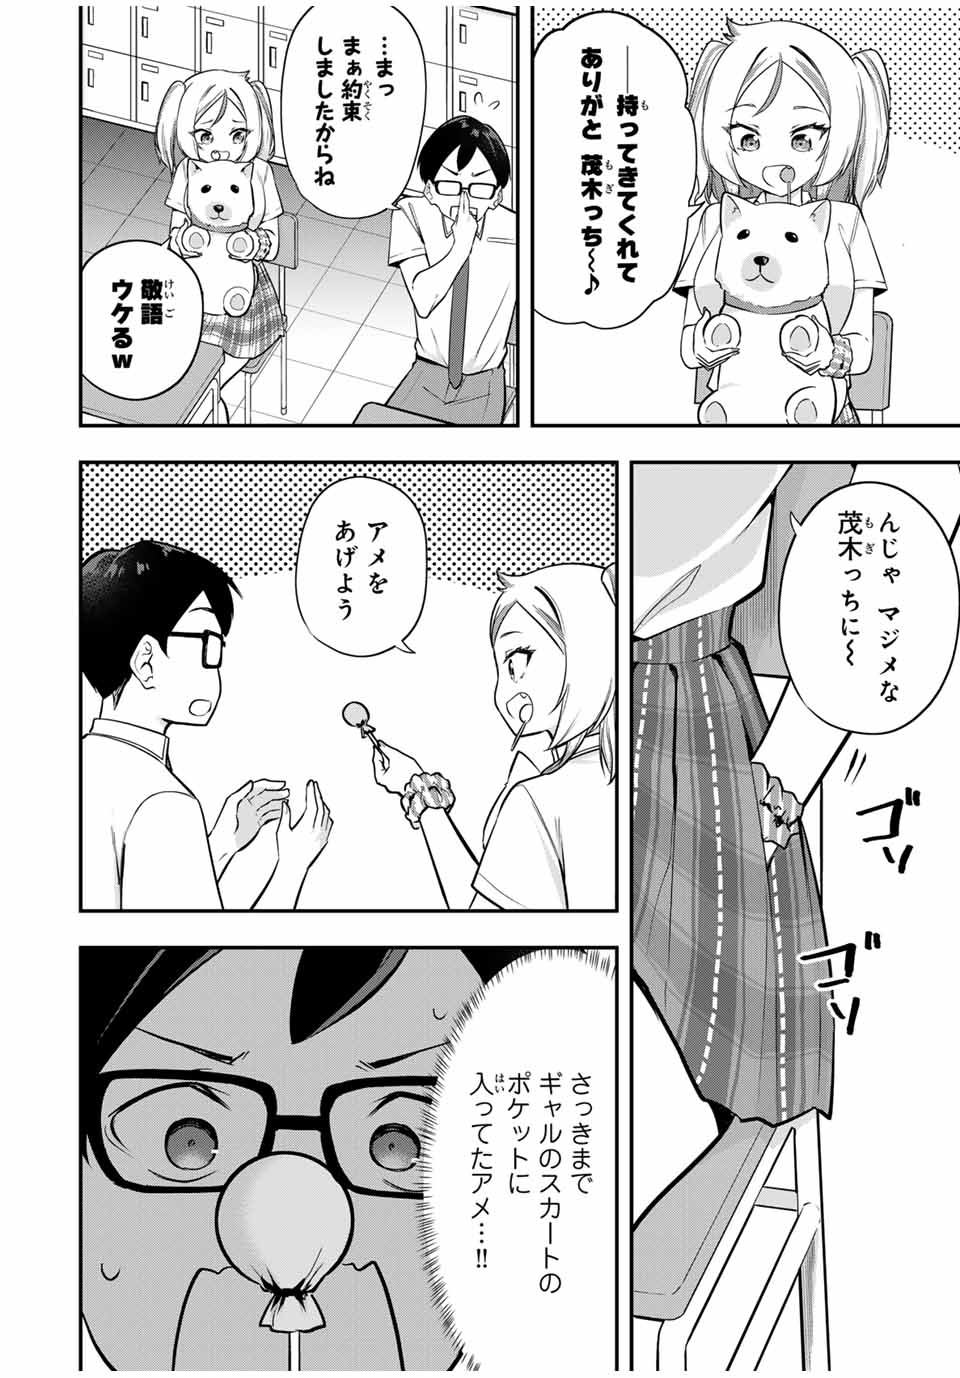 Heroine wa xx Okasegitai - Chapter 2 - Page 2